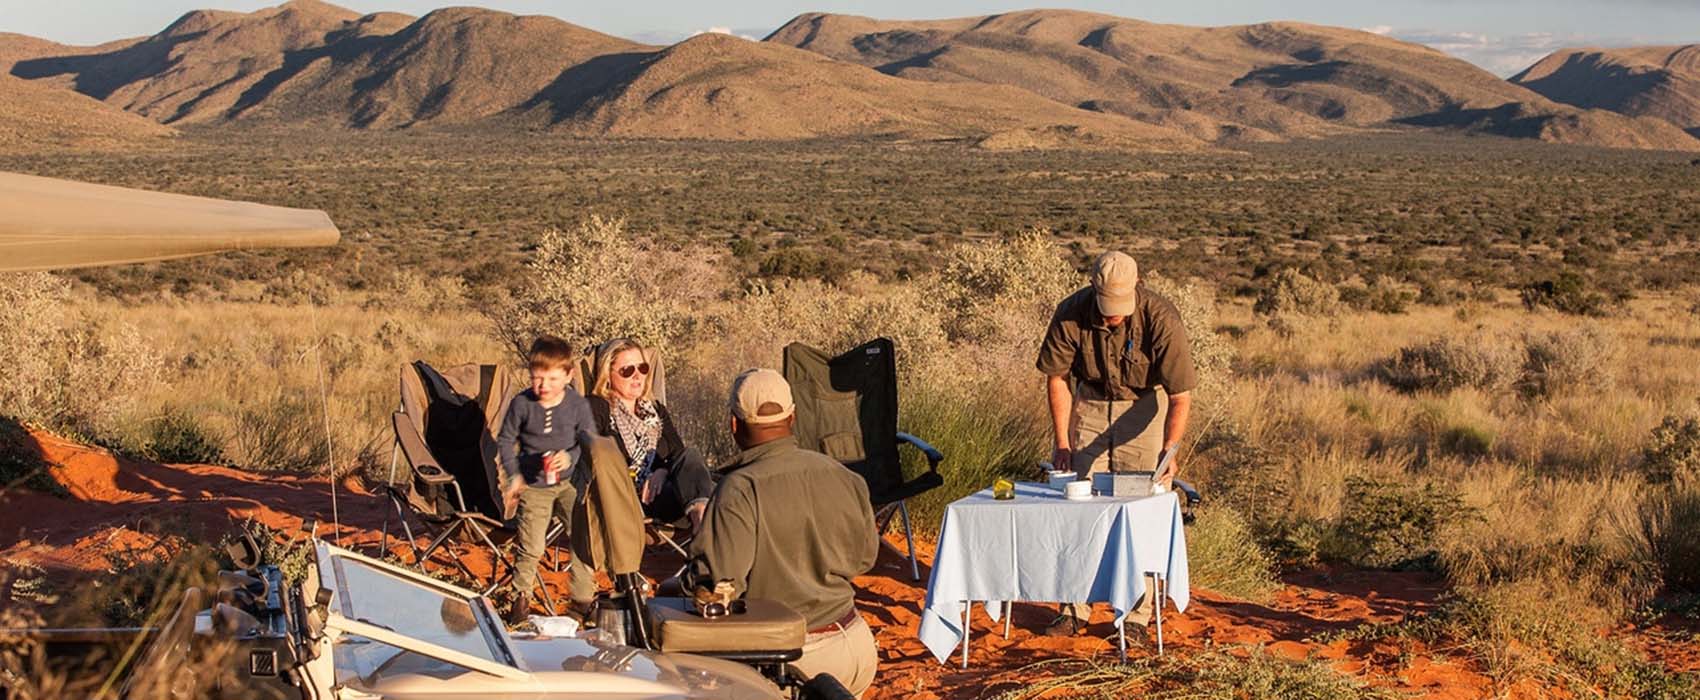 Family safari Tswalu Kalahari South Africa luxury holiday